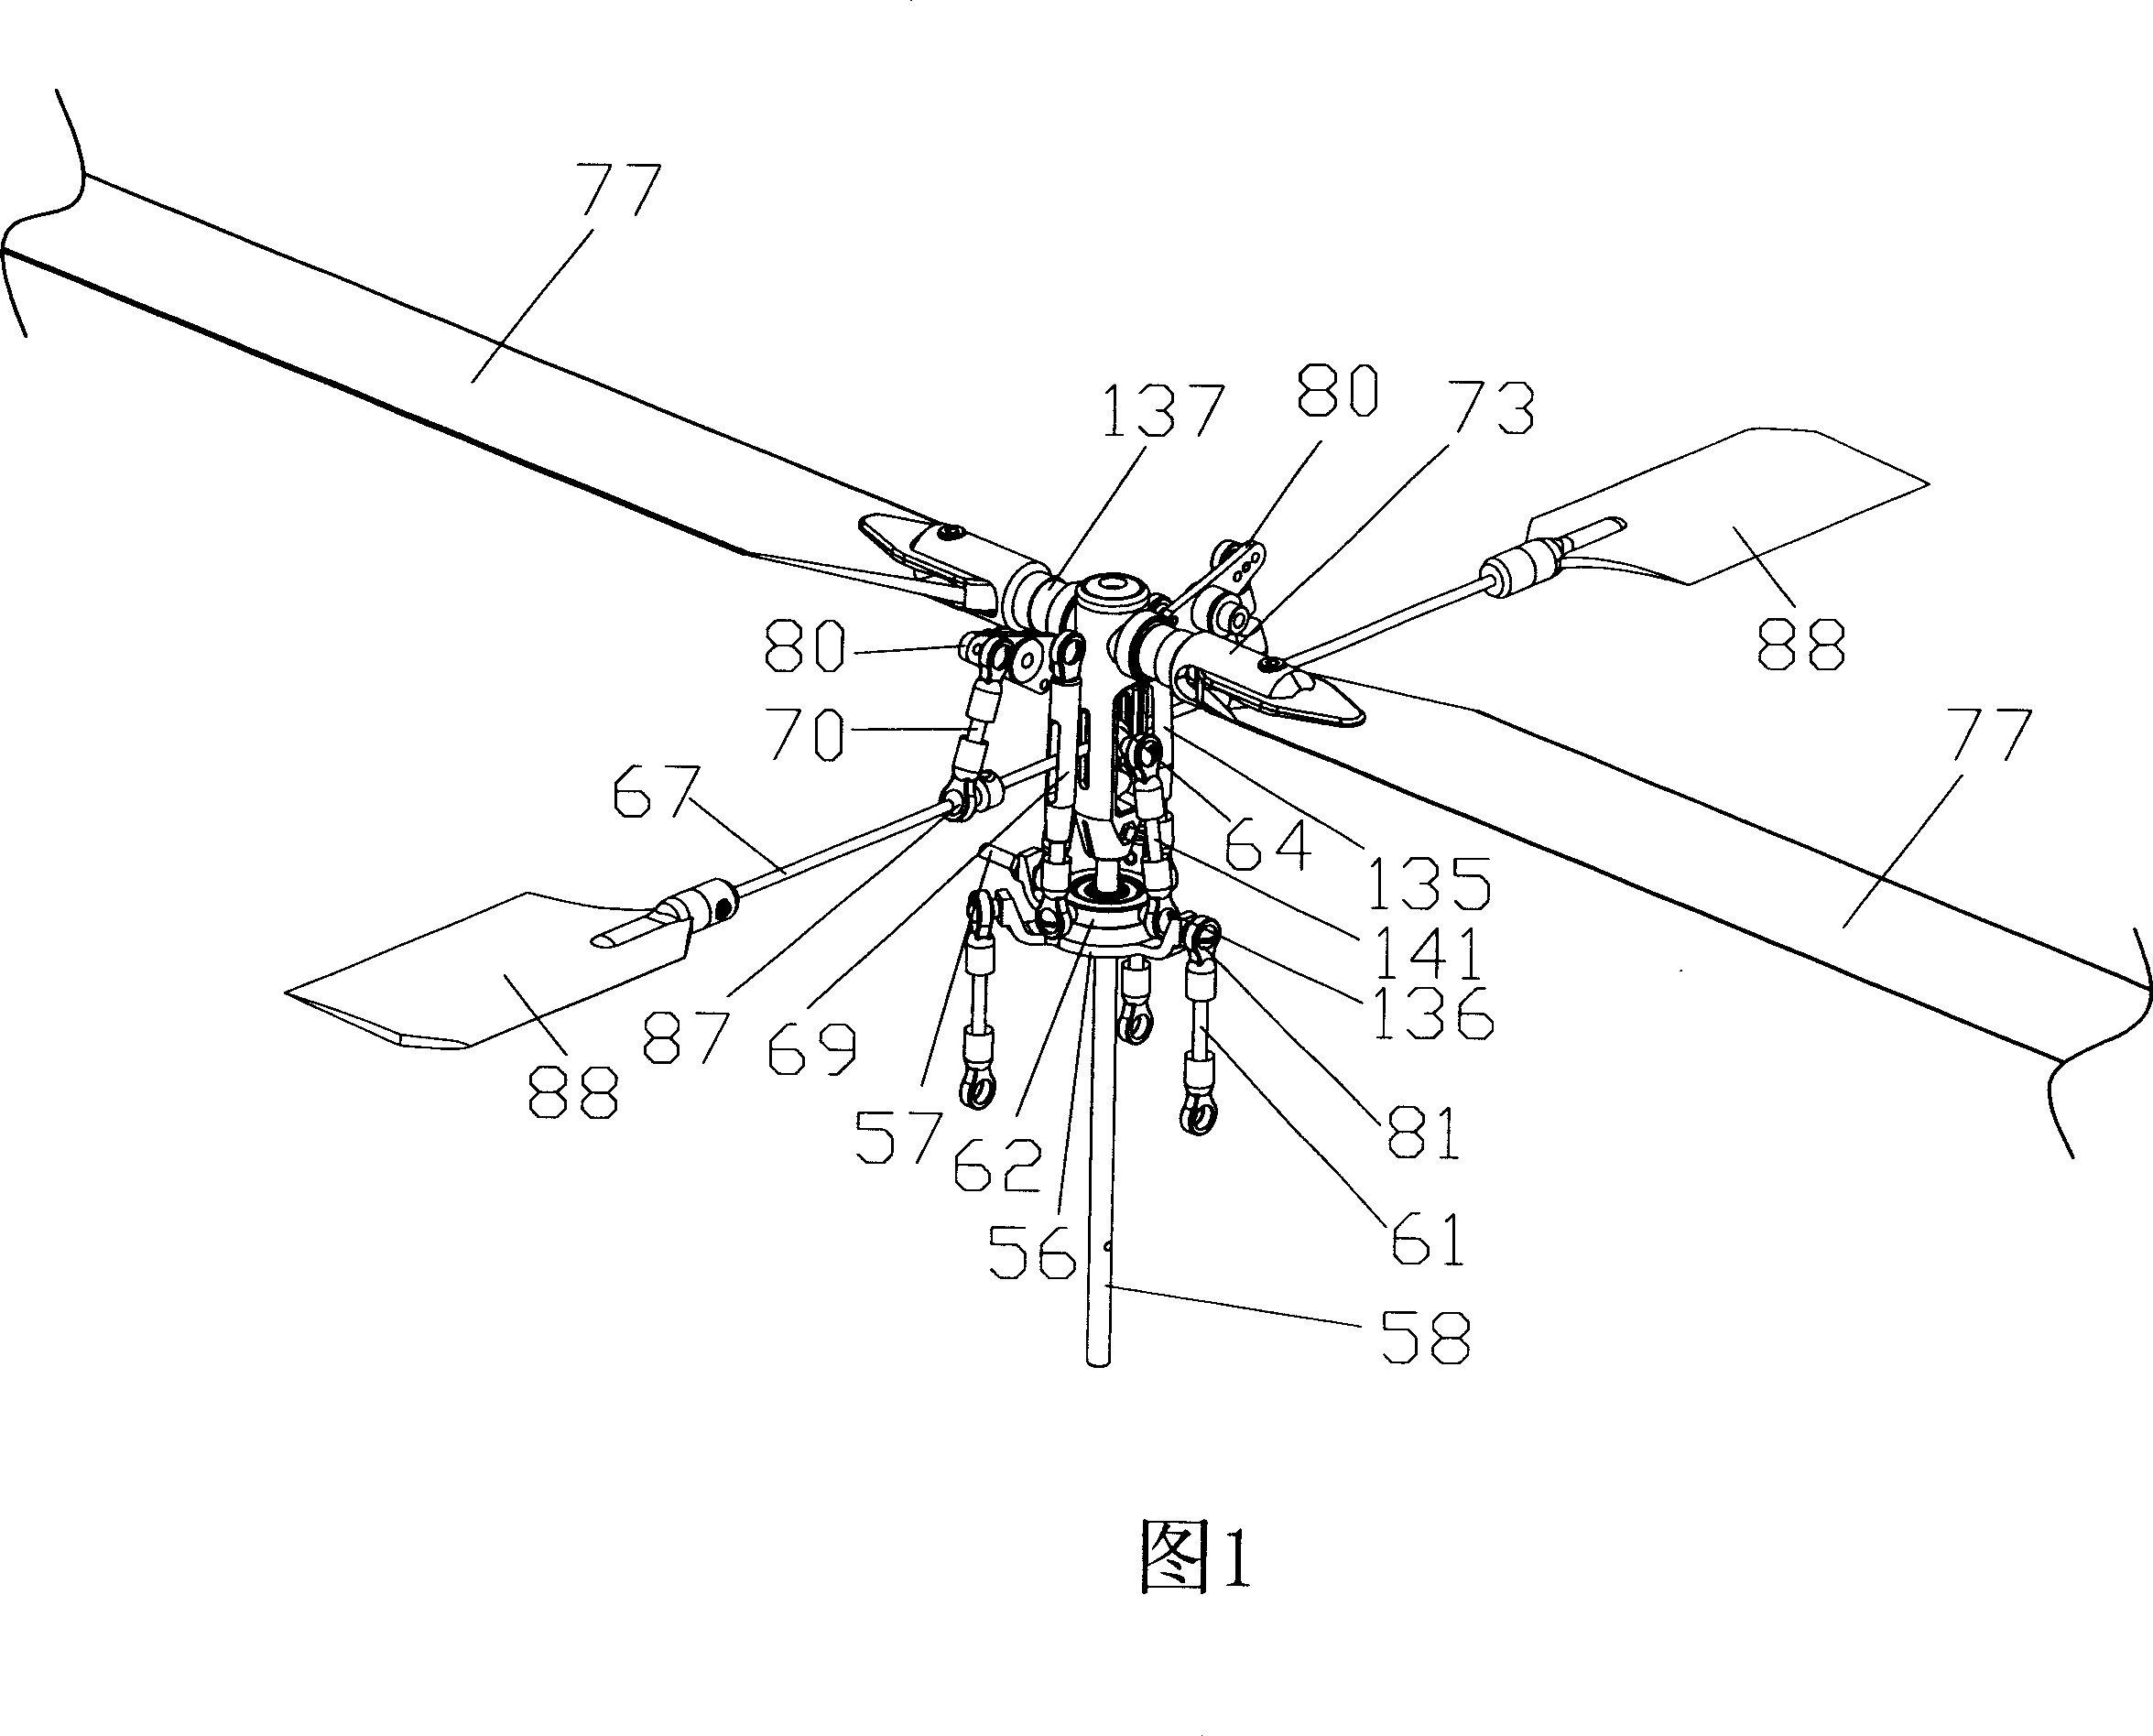 Steering mechanism for model helicopter